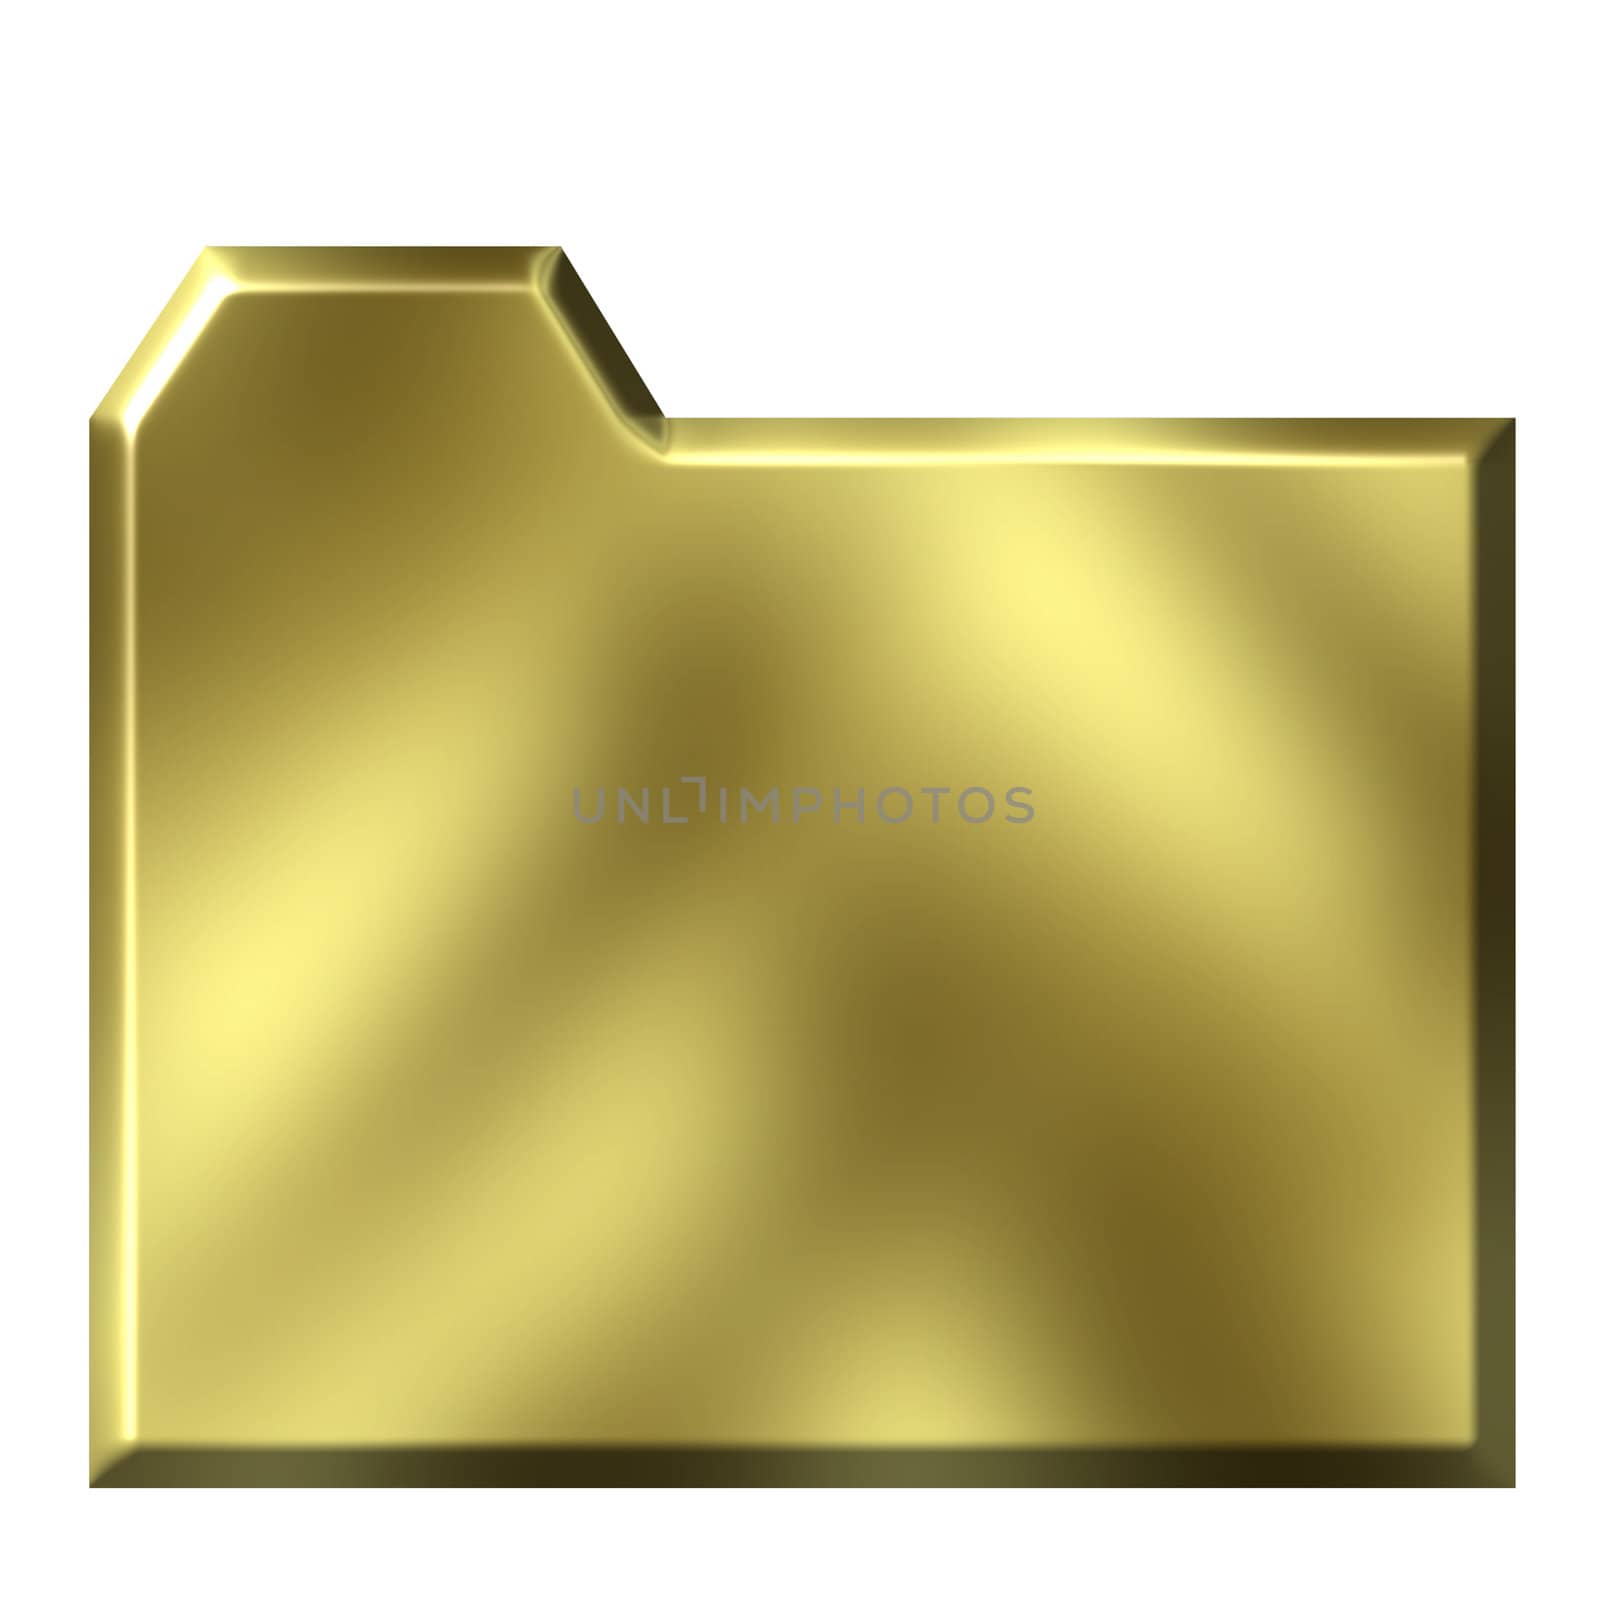 Golden Folder by Georgios